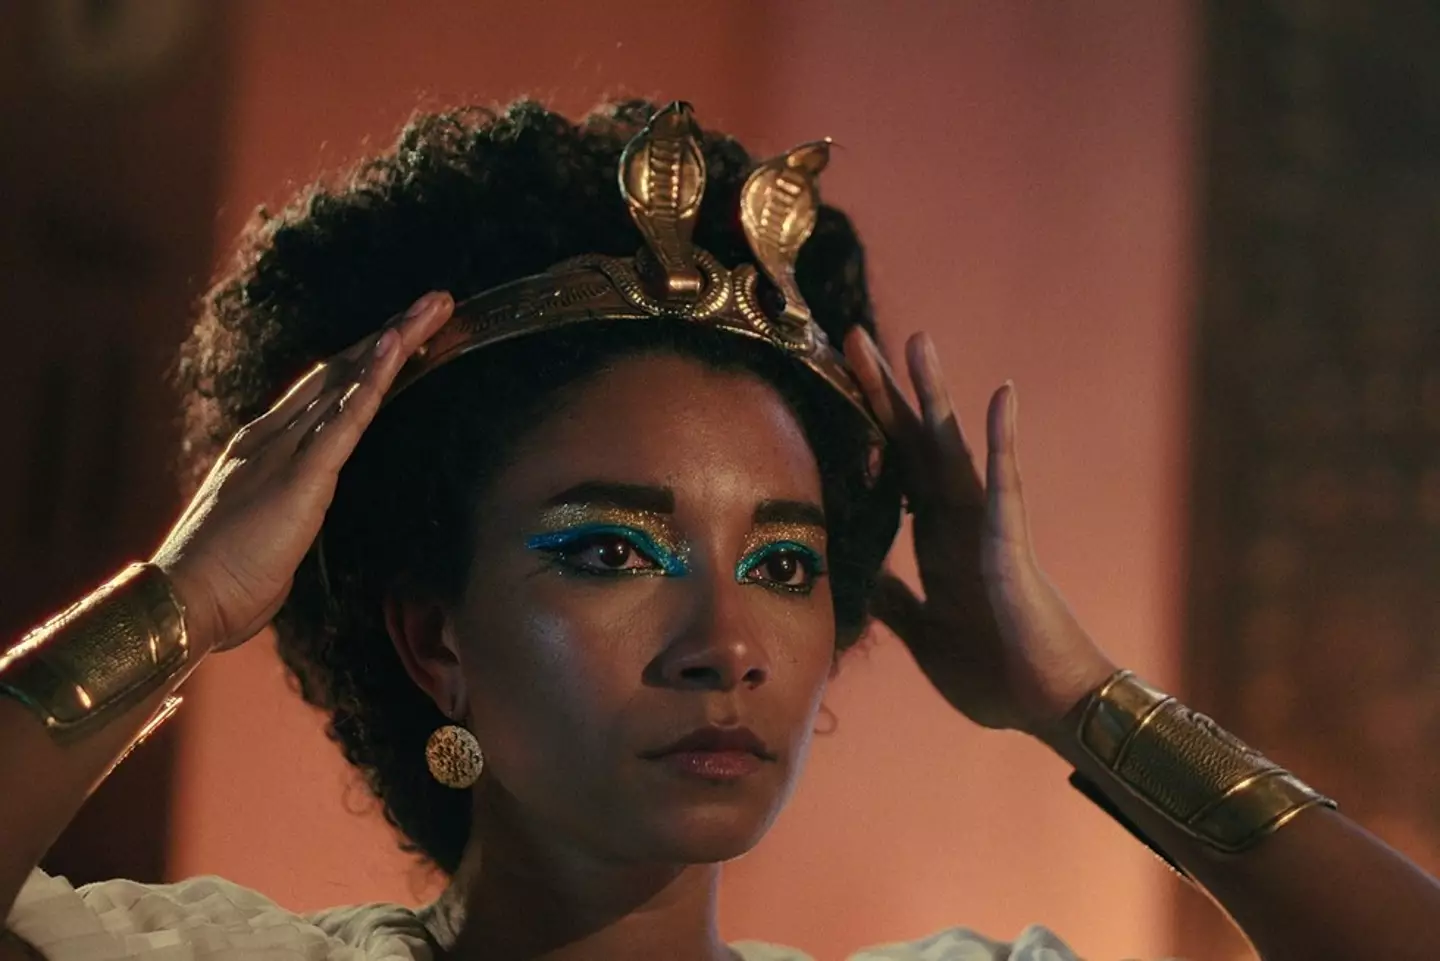 Adele James plays Queen Cleopatra in the new Netflix series.